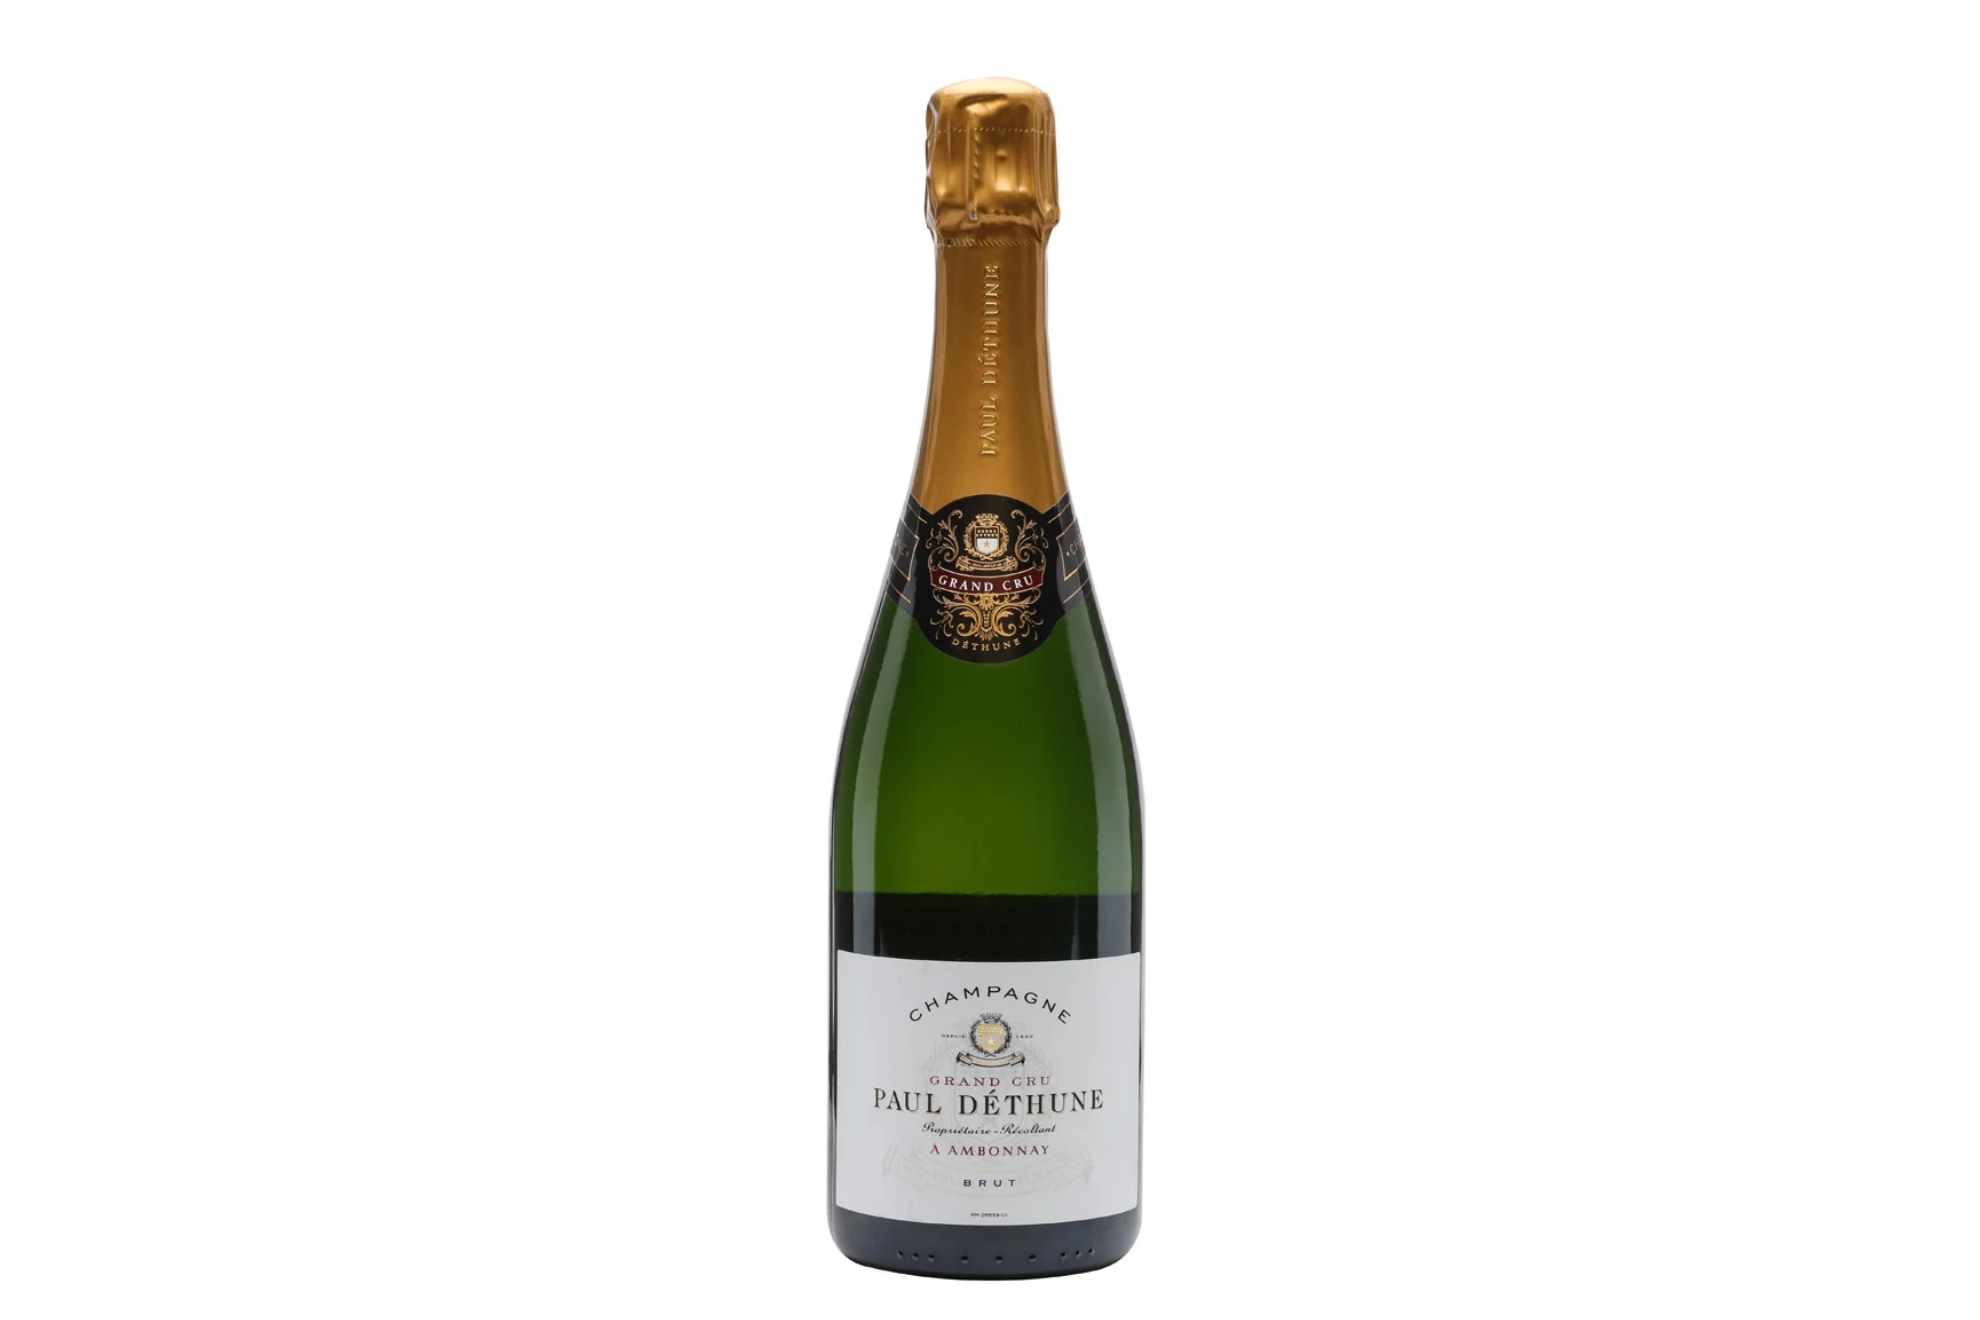 Paul Dethune Brut Champagne Grand Cru 'Ambonnay' NV